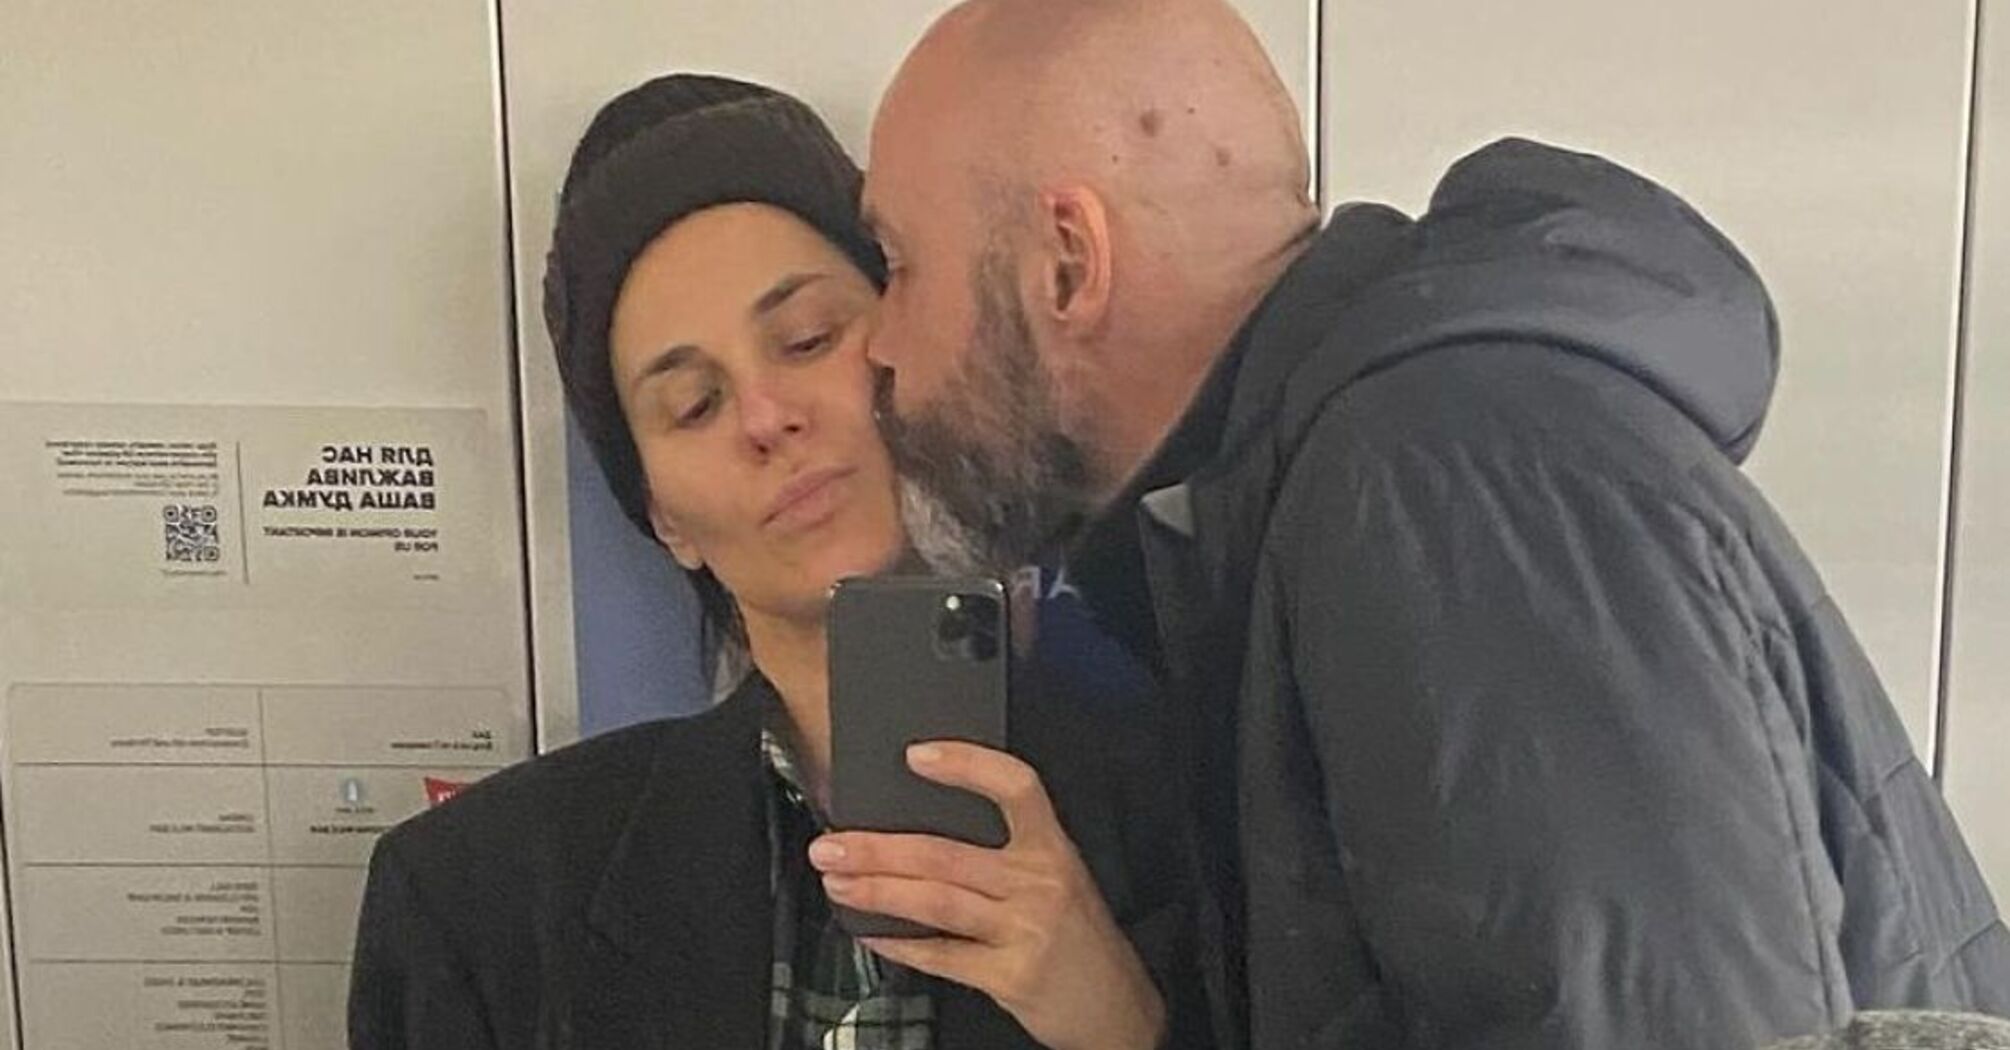 Yefrosinina shared rare photos with her military husband